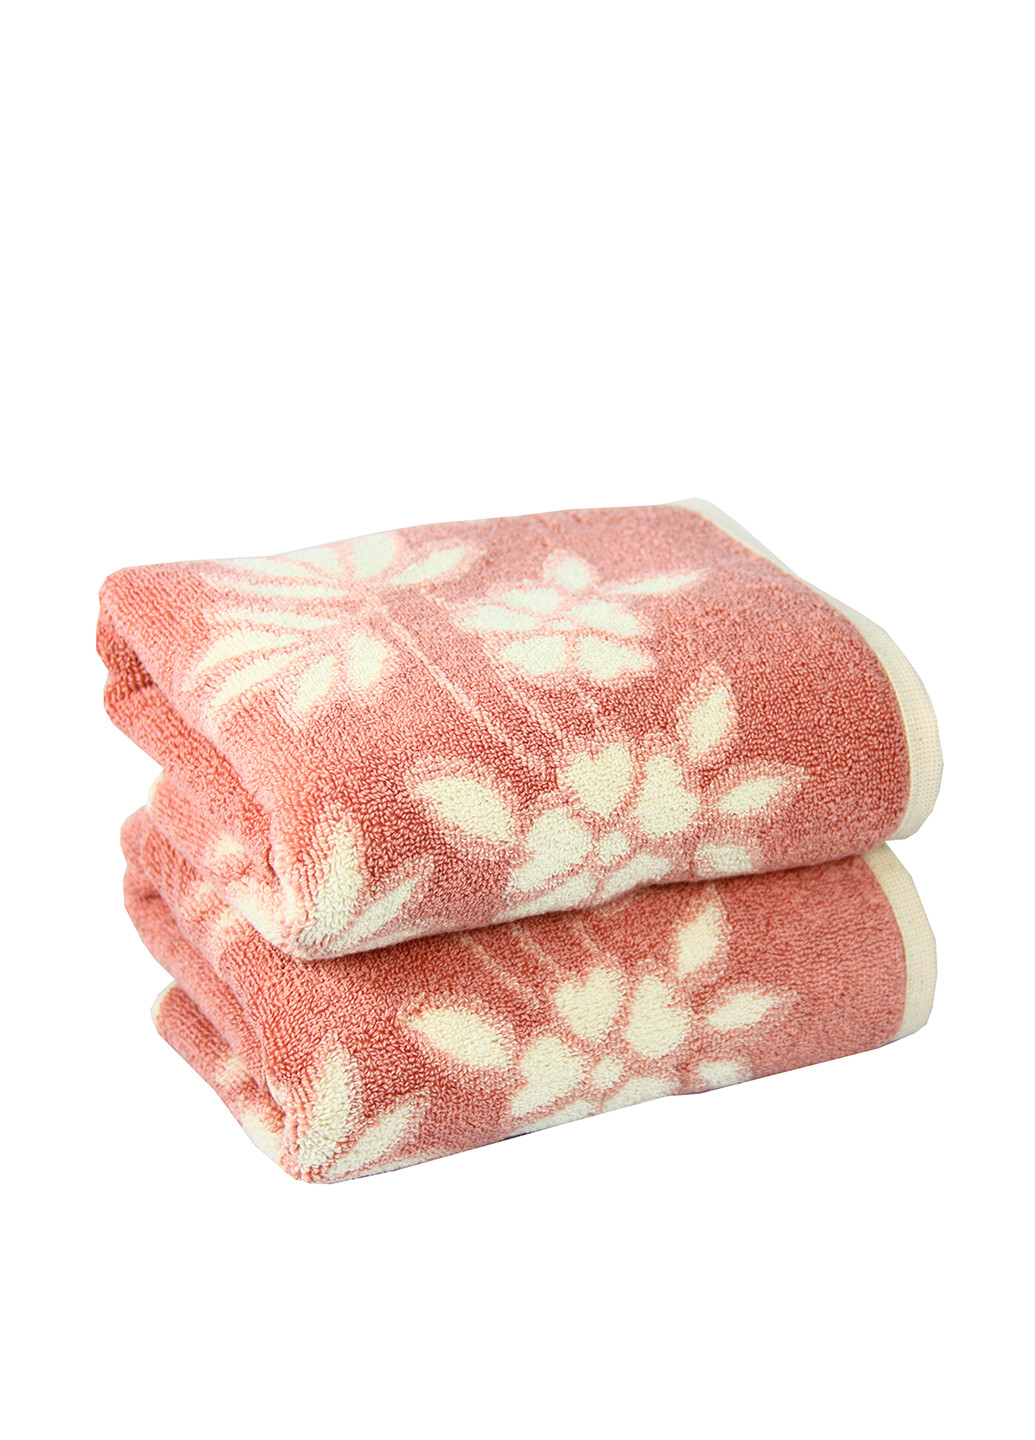 Maisonette полотенце (1 шт.), 50х90 см рисунок розово-коричневый производство - Турция